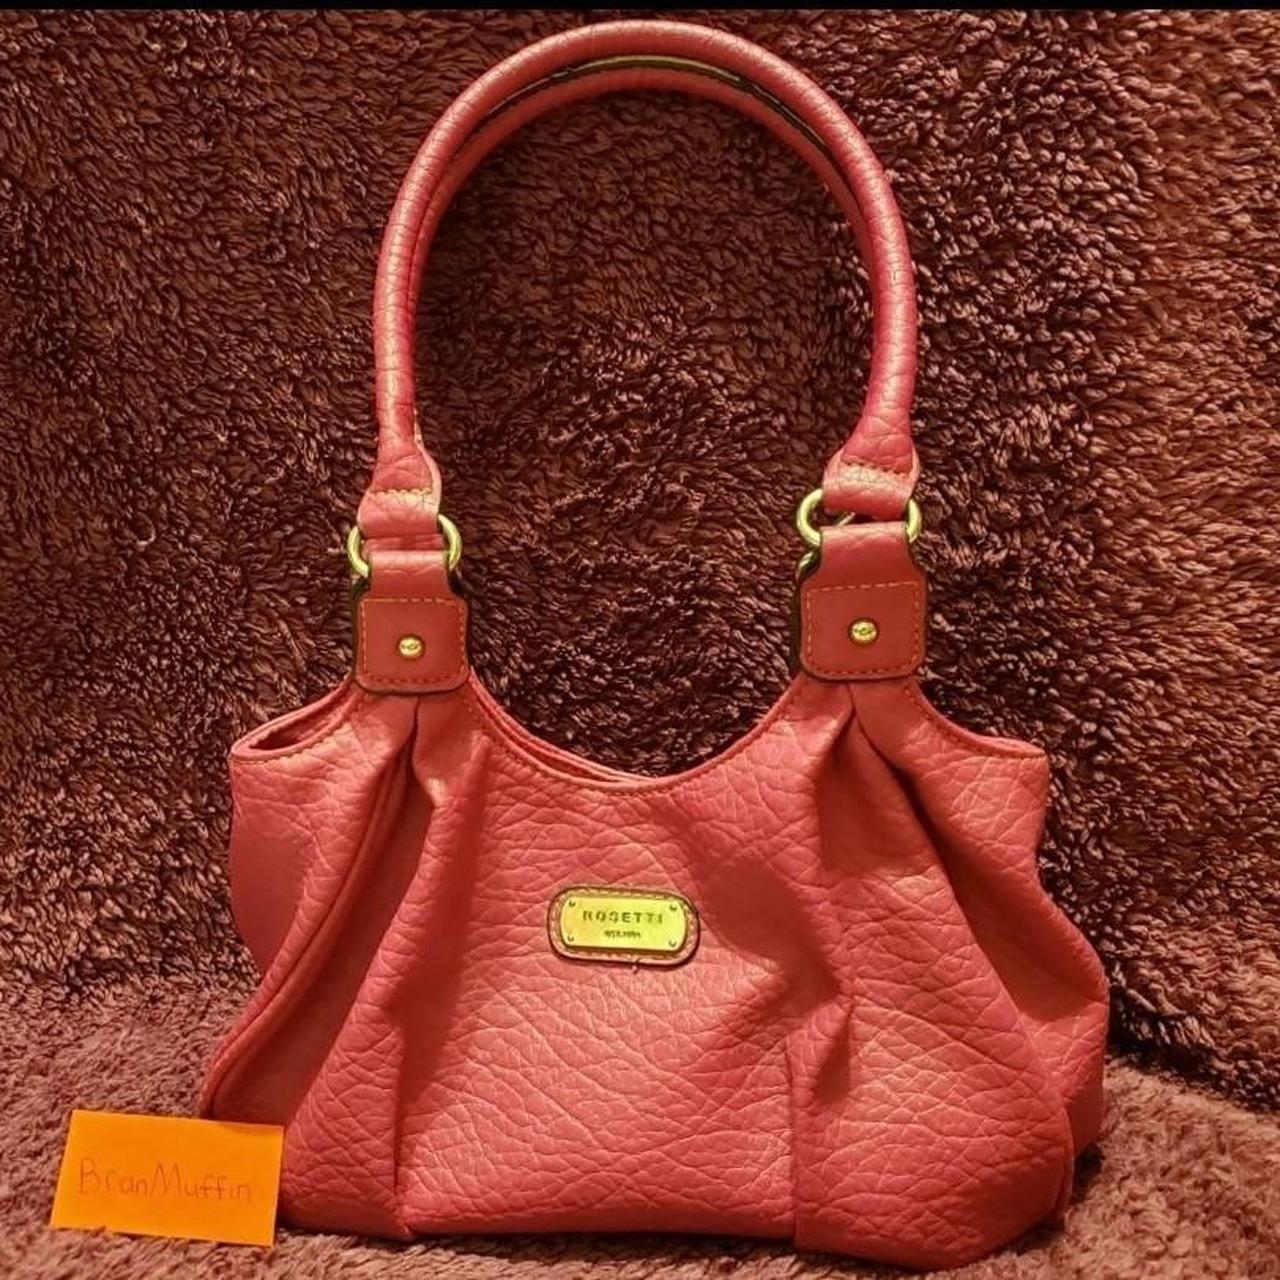 Amazon.com: Women's Shoulder Handbags - Rosetti / Women's Shoulder Handbags  / Women's Handba...: Clothing, Shoes & Jewelry